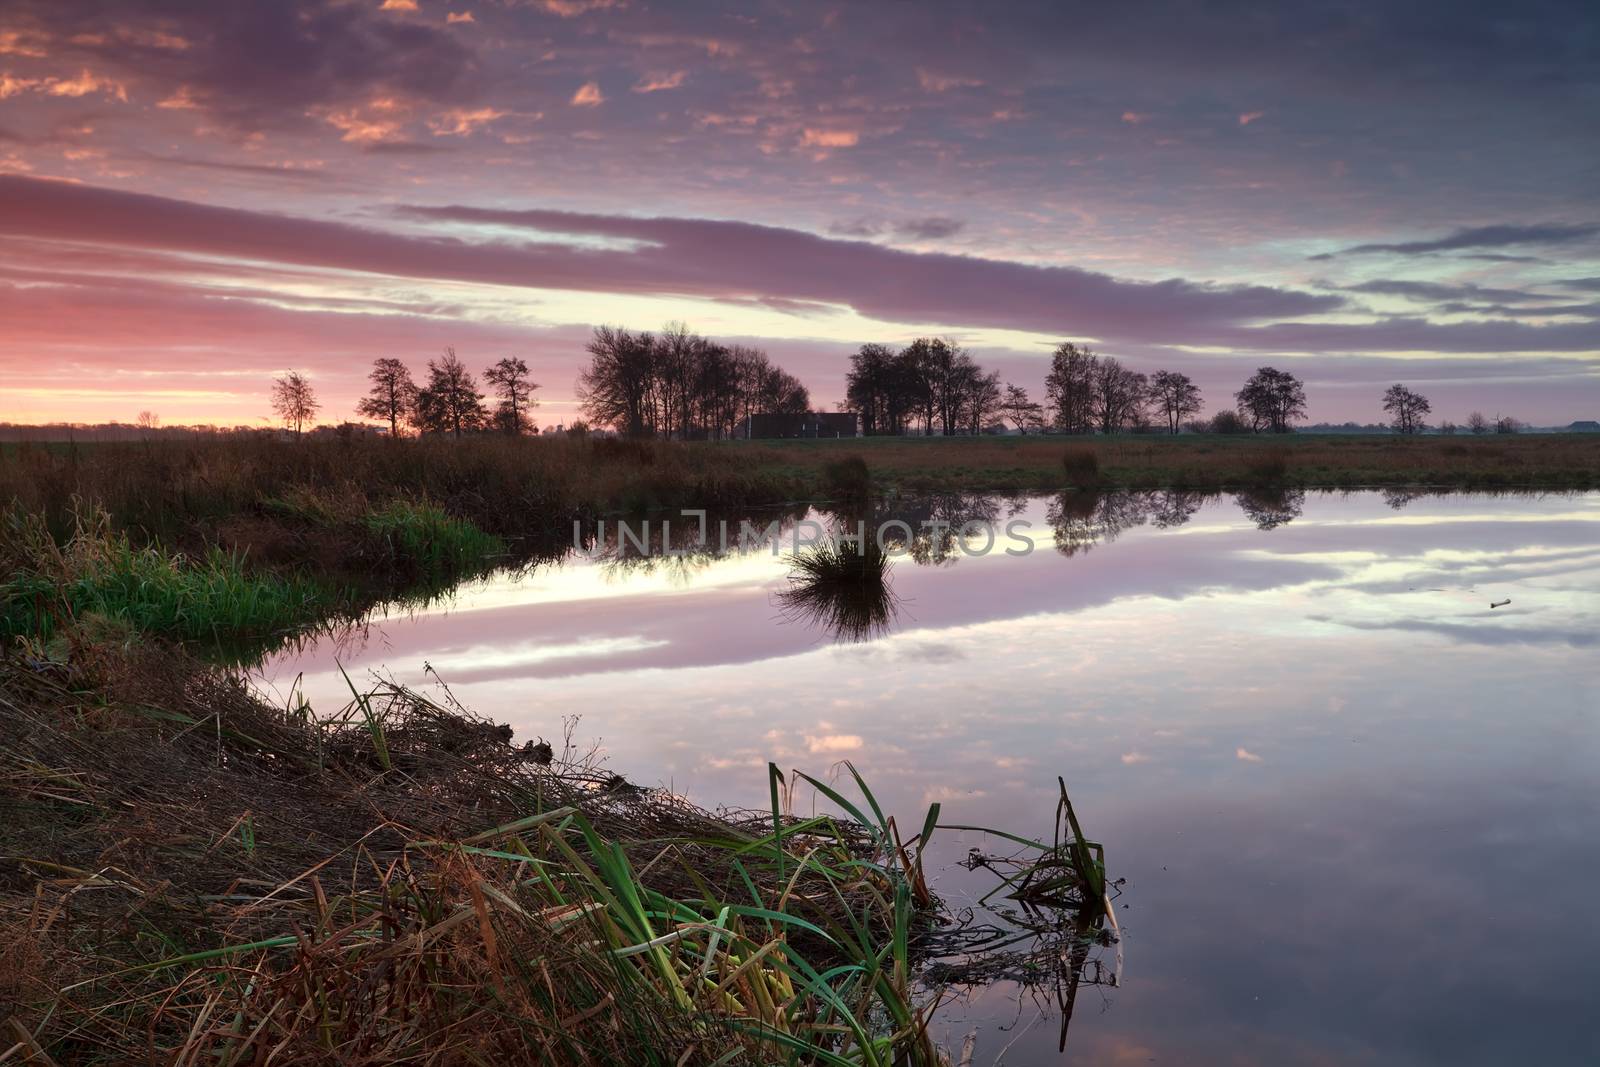 purple sunrise sky reflected in river, Onlanden, Drenthe, Netherlands